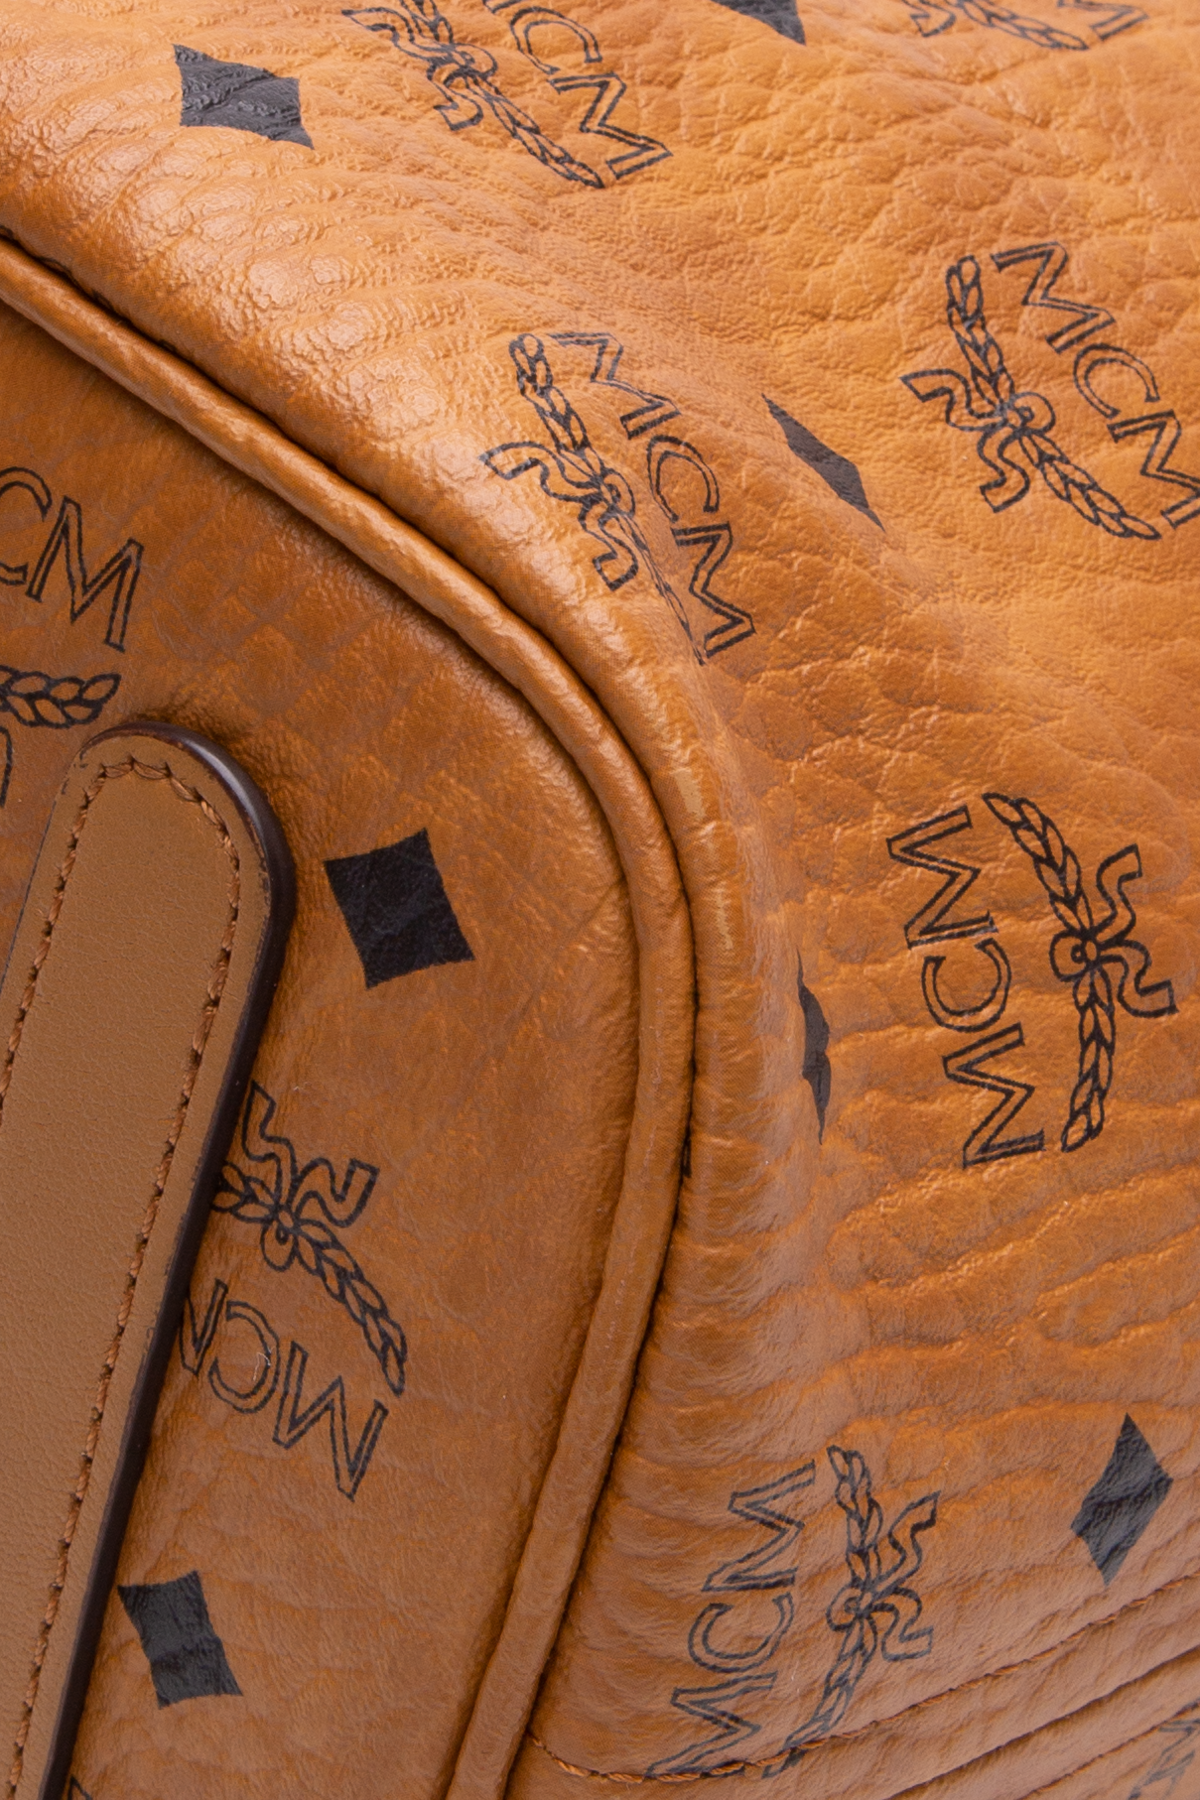 Mcm Monogram & Diamond Pattern Leather Tote Bag W/ Zipper